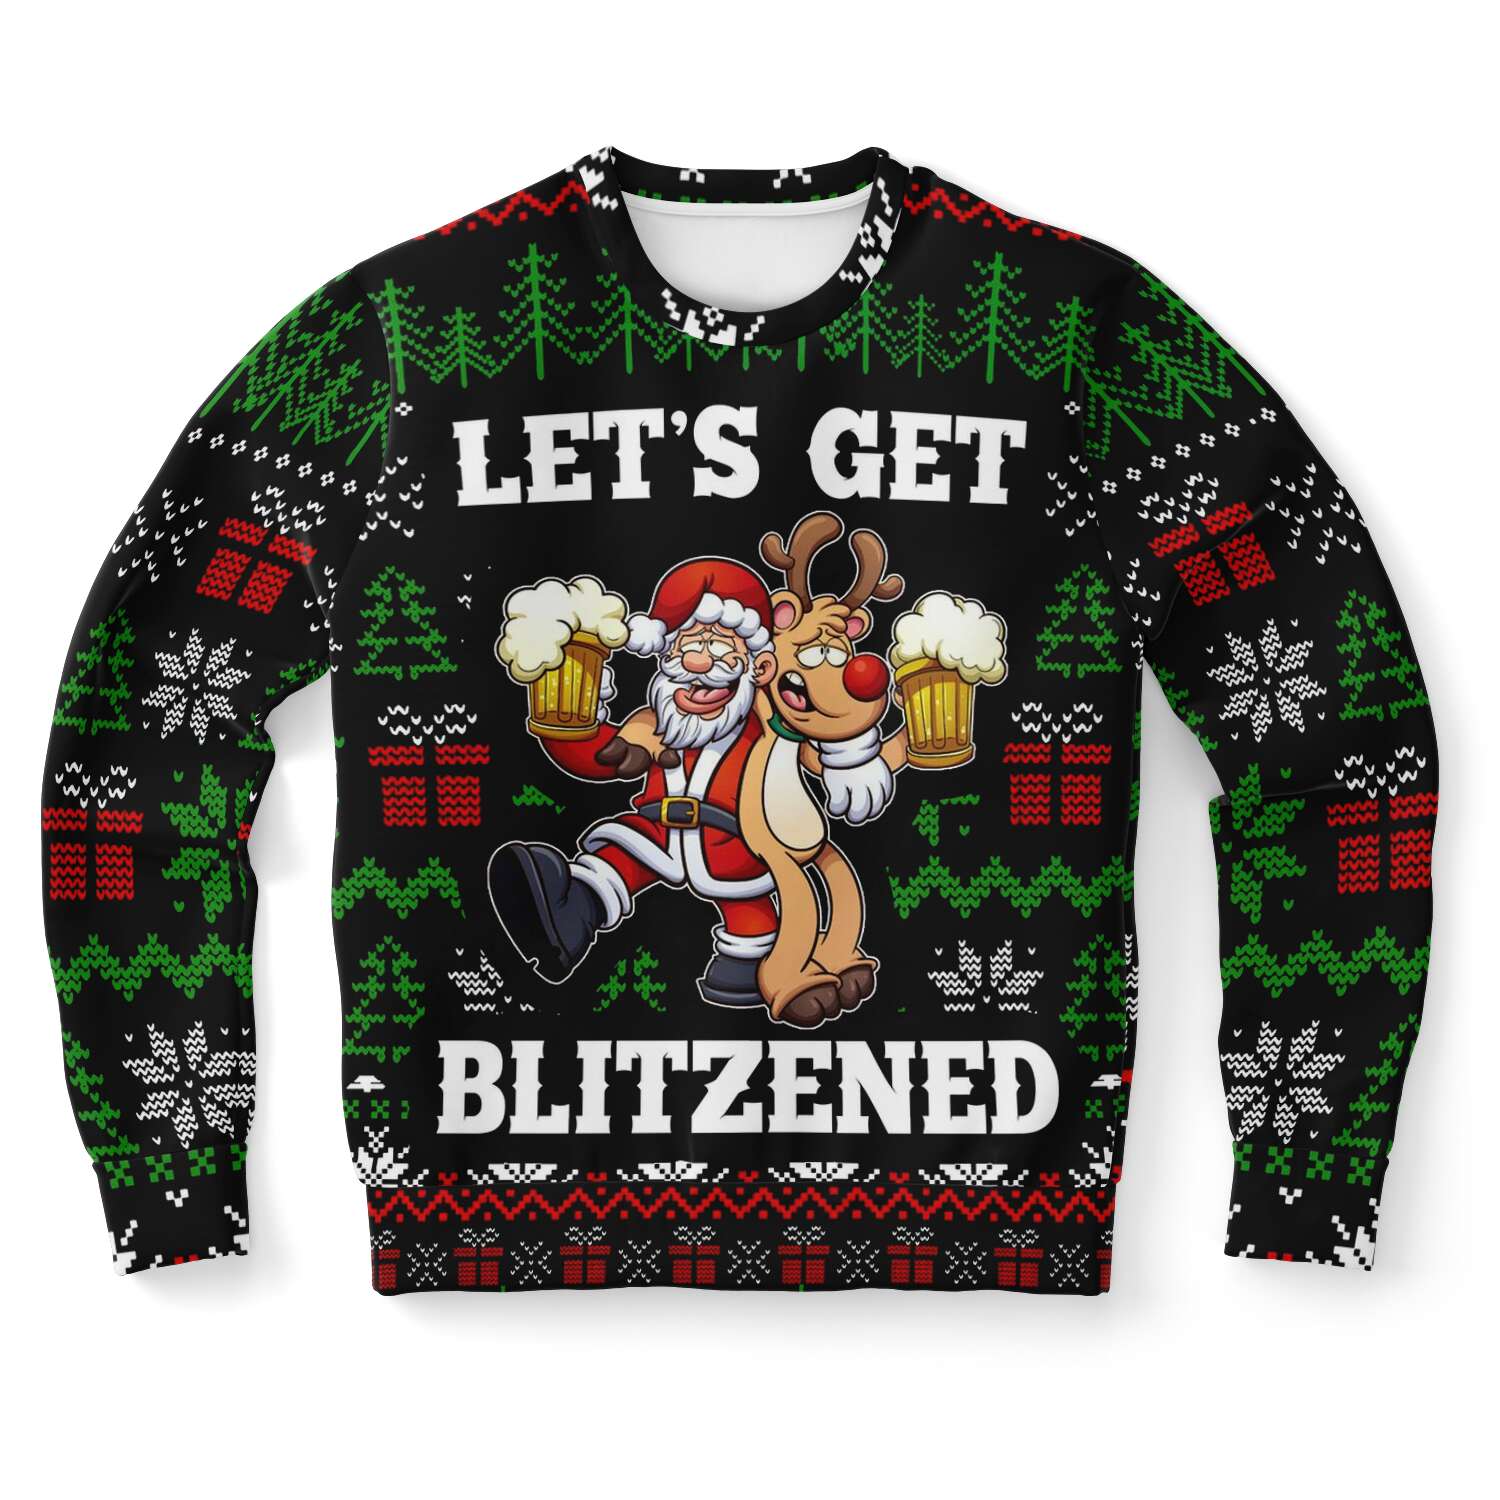 Get Blitzened - Sweater